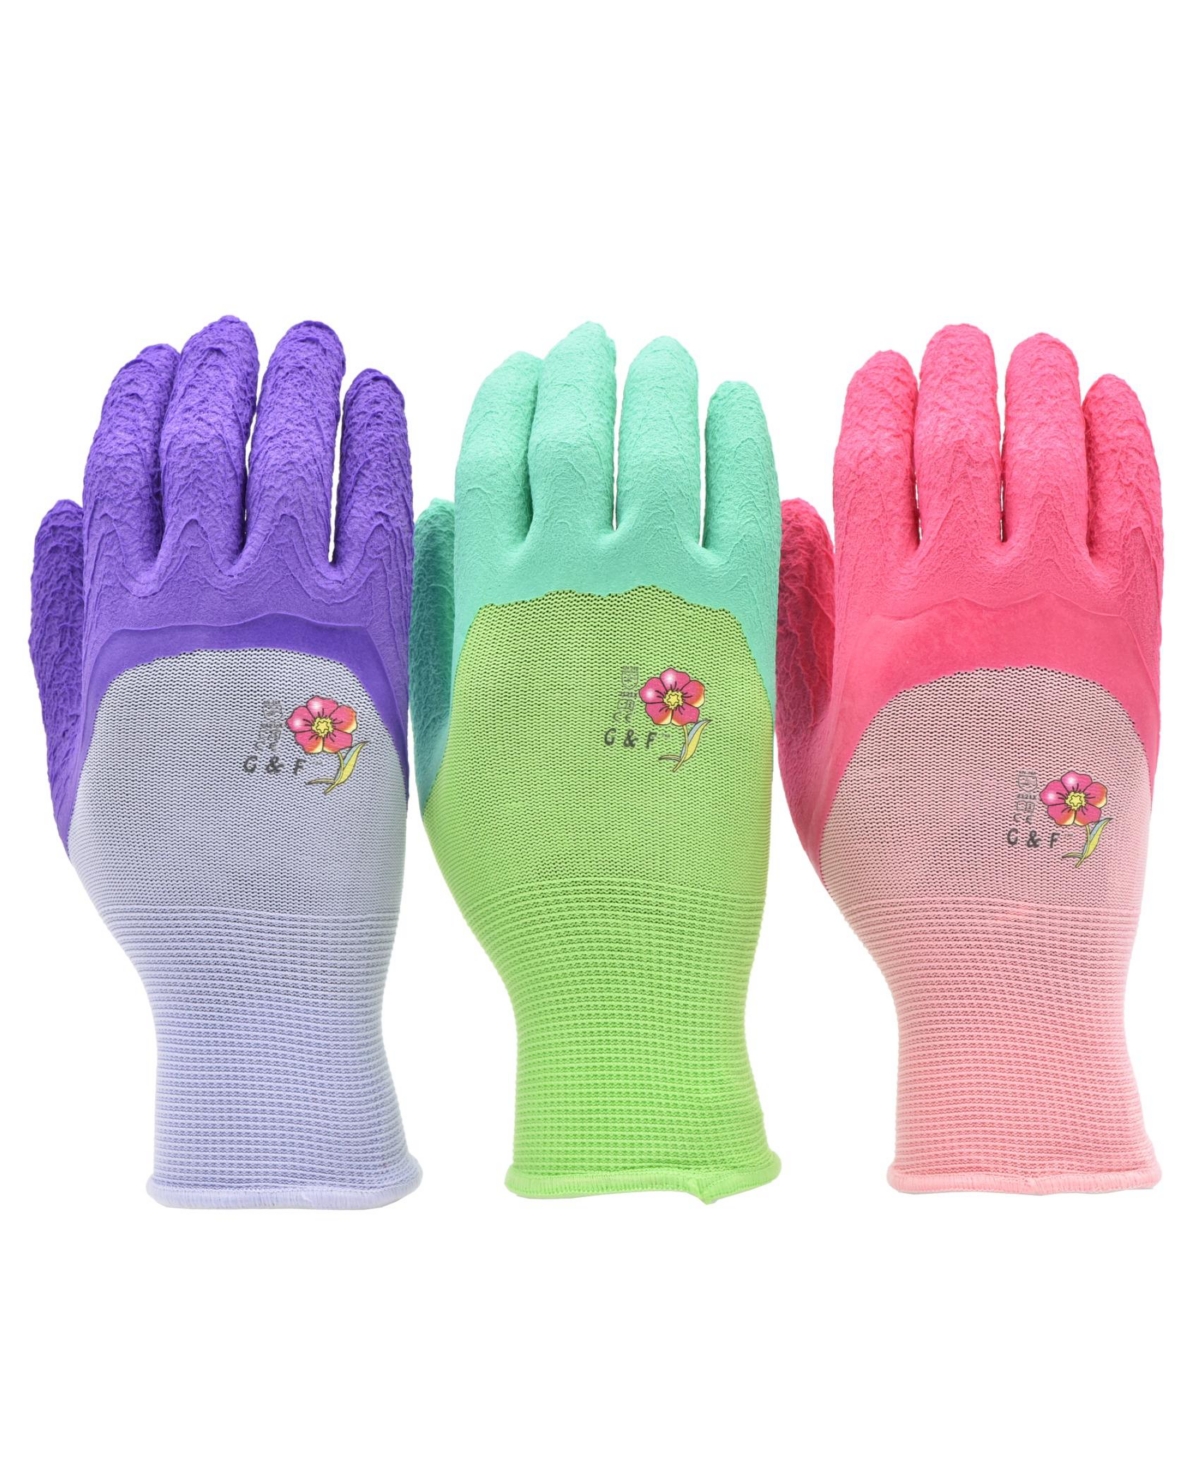 Microfoam Women Garden Gloves, 3 Pairs - Assorted Pre-Packed